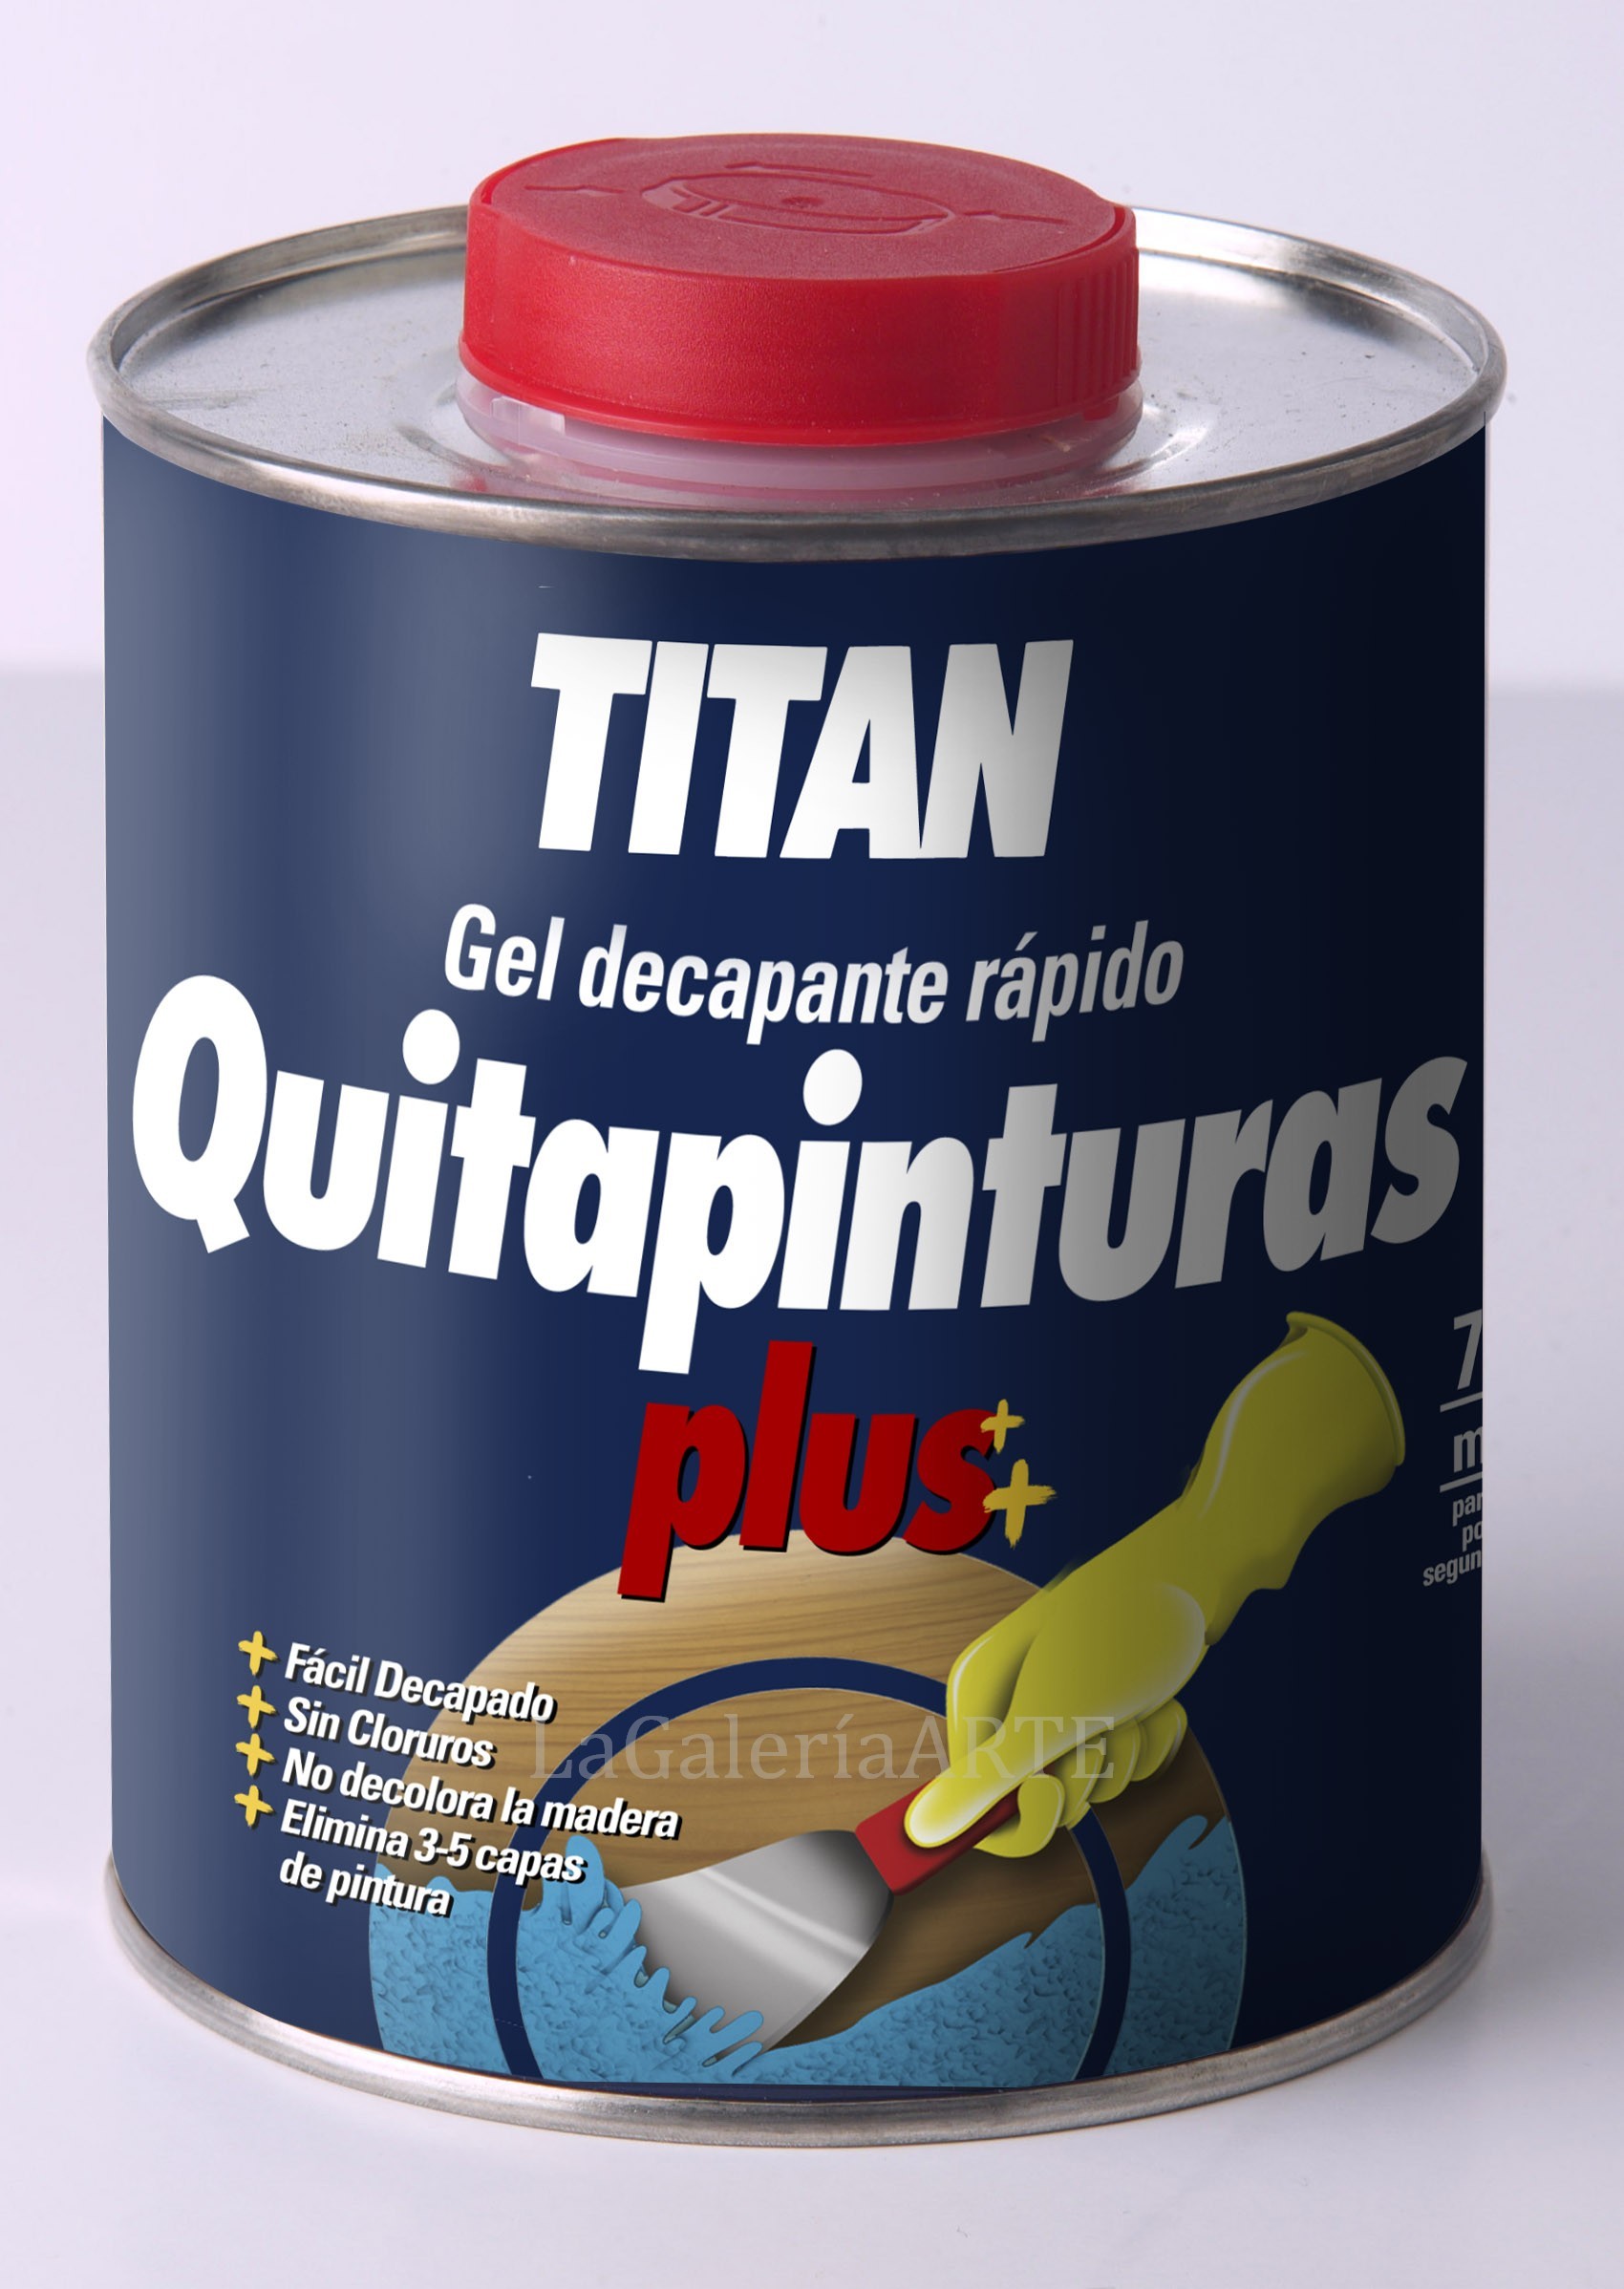 Quitapinturas Plus Gel Decapante Rapido TITAN 375ml